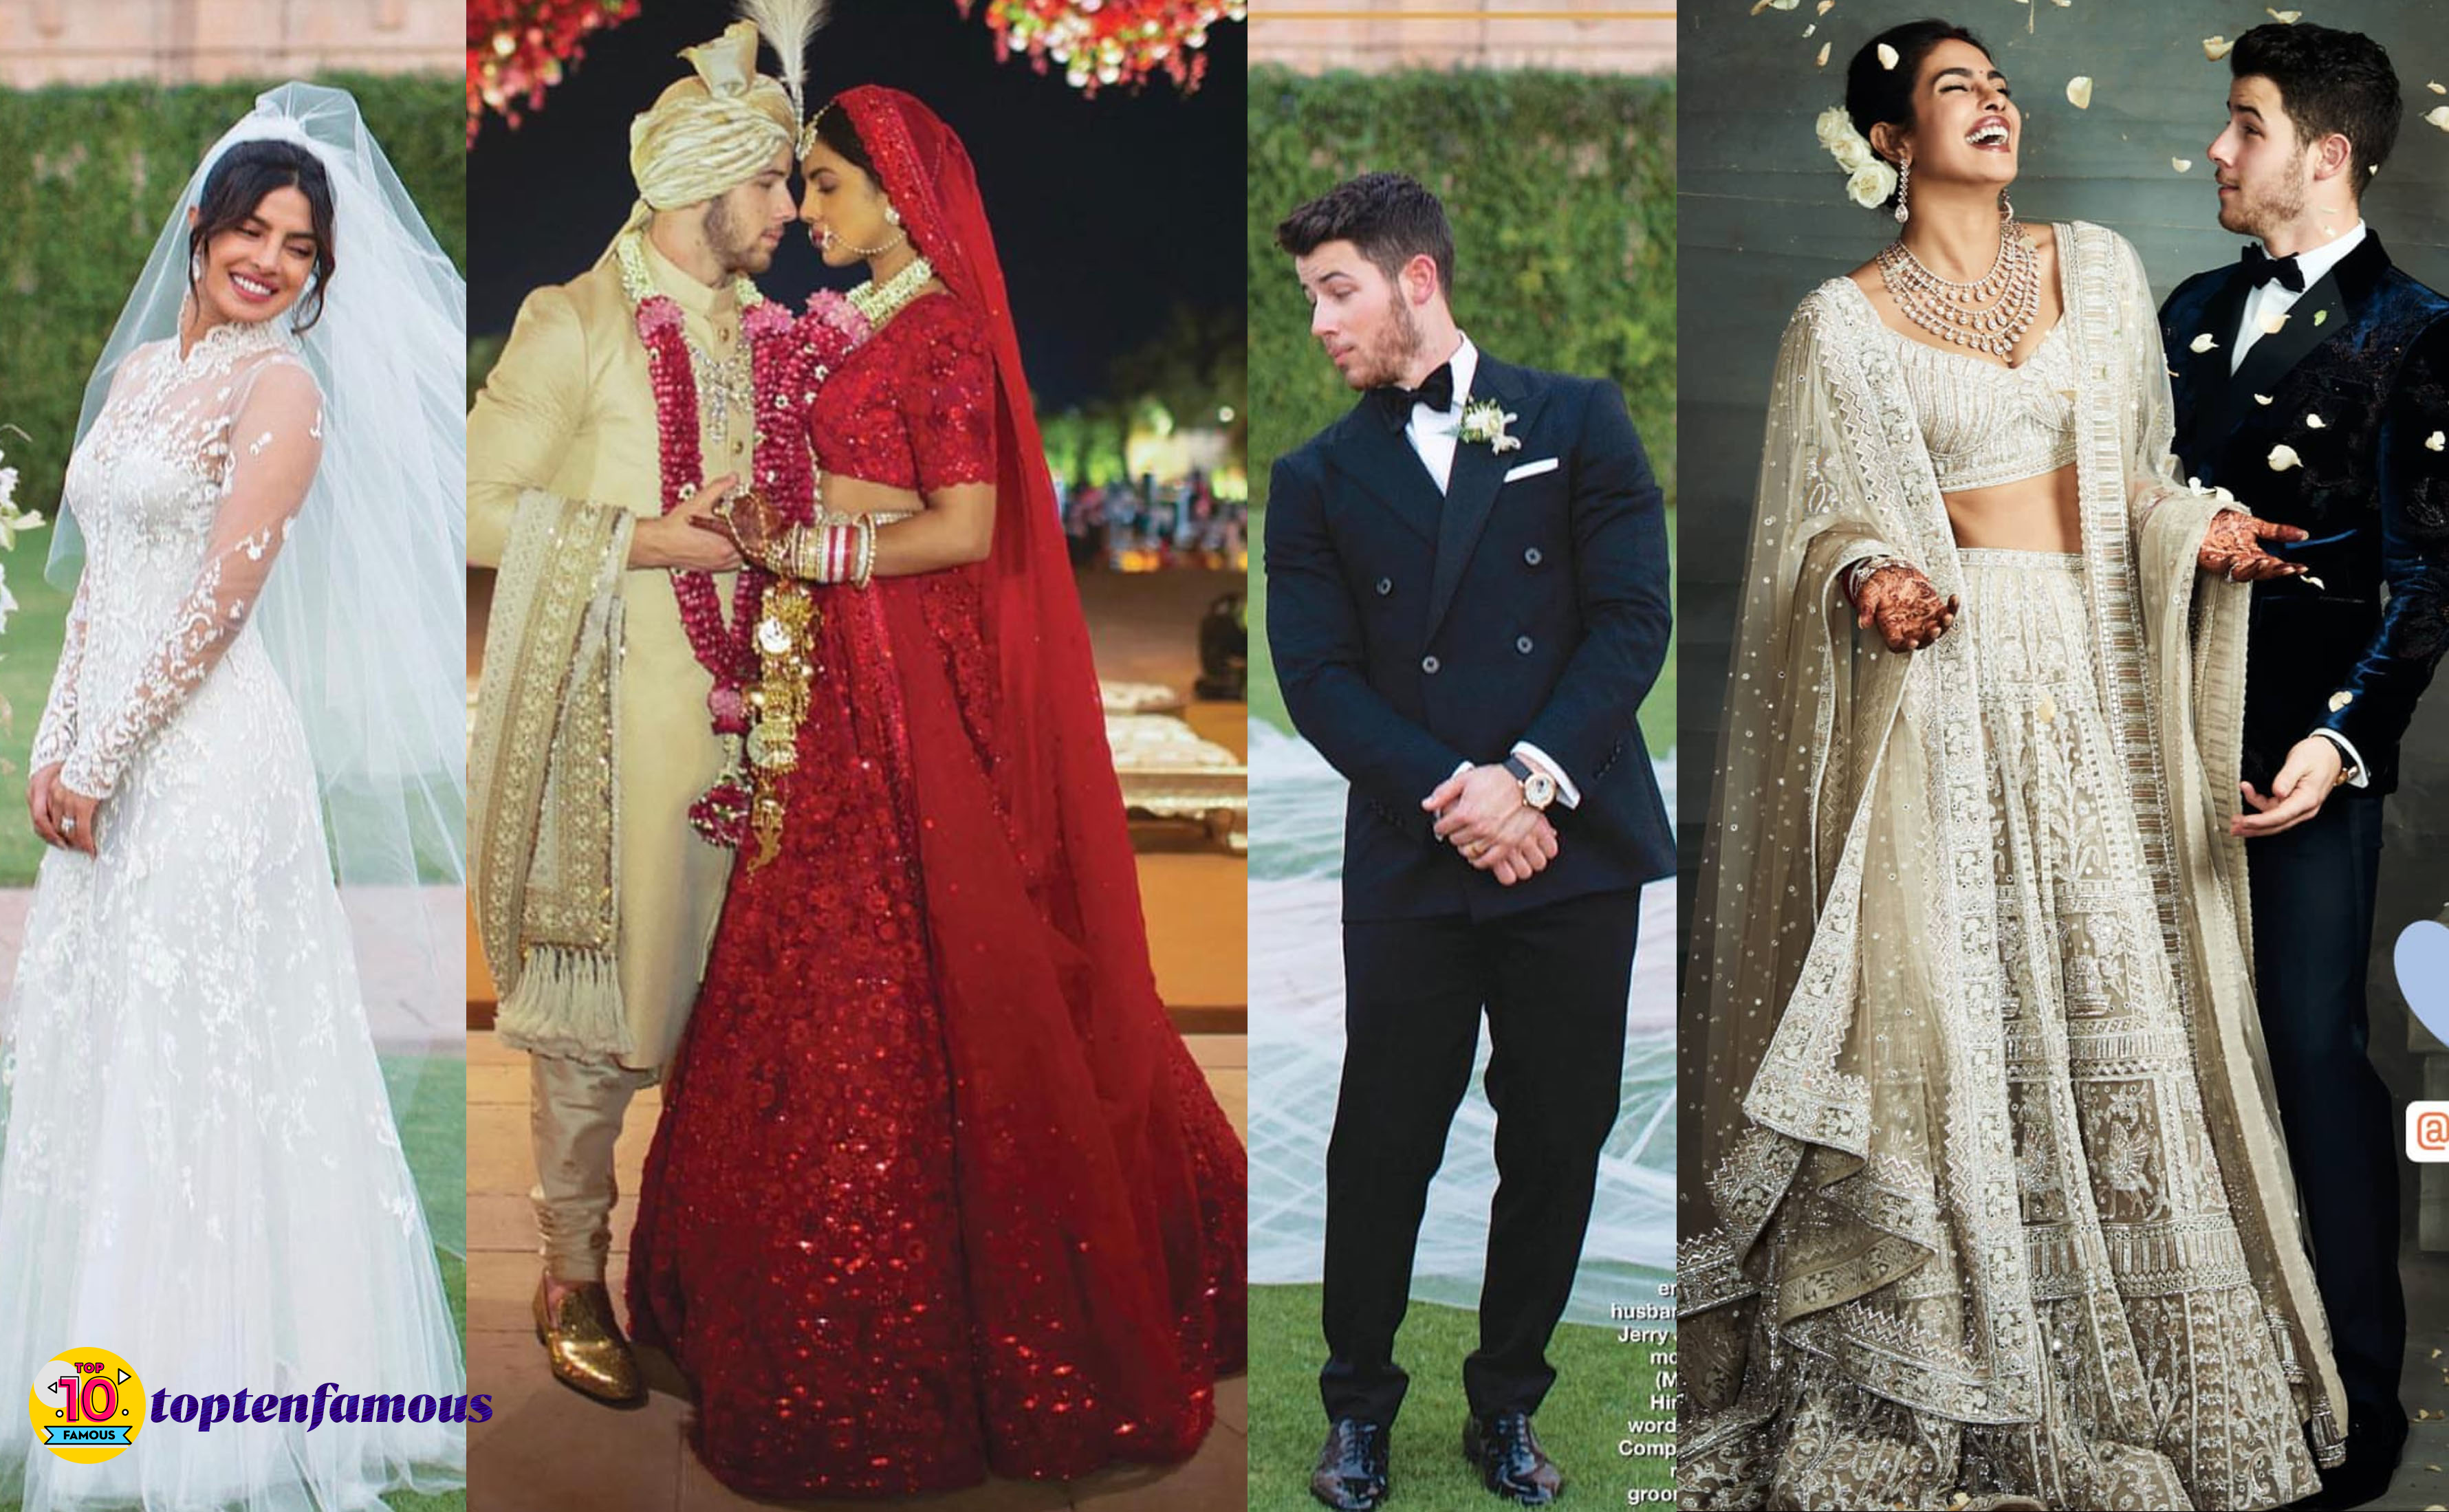 Nick Jonas and His Wife Priyanka Chopra: A Millionaire Couple at Hollywood